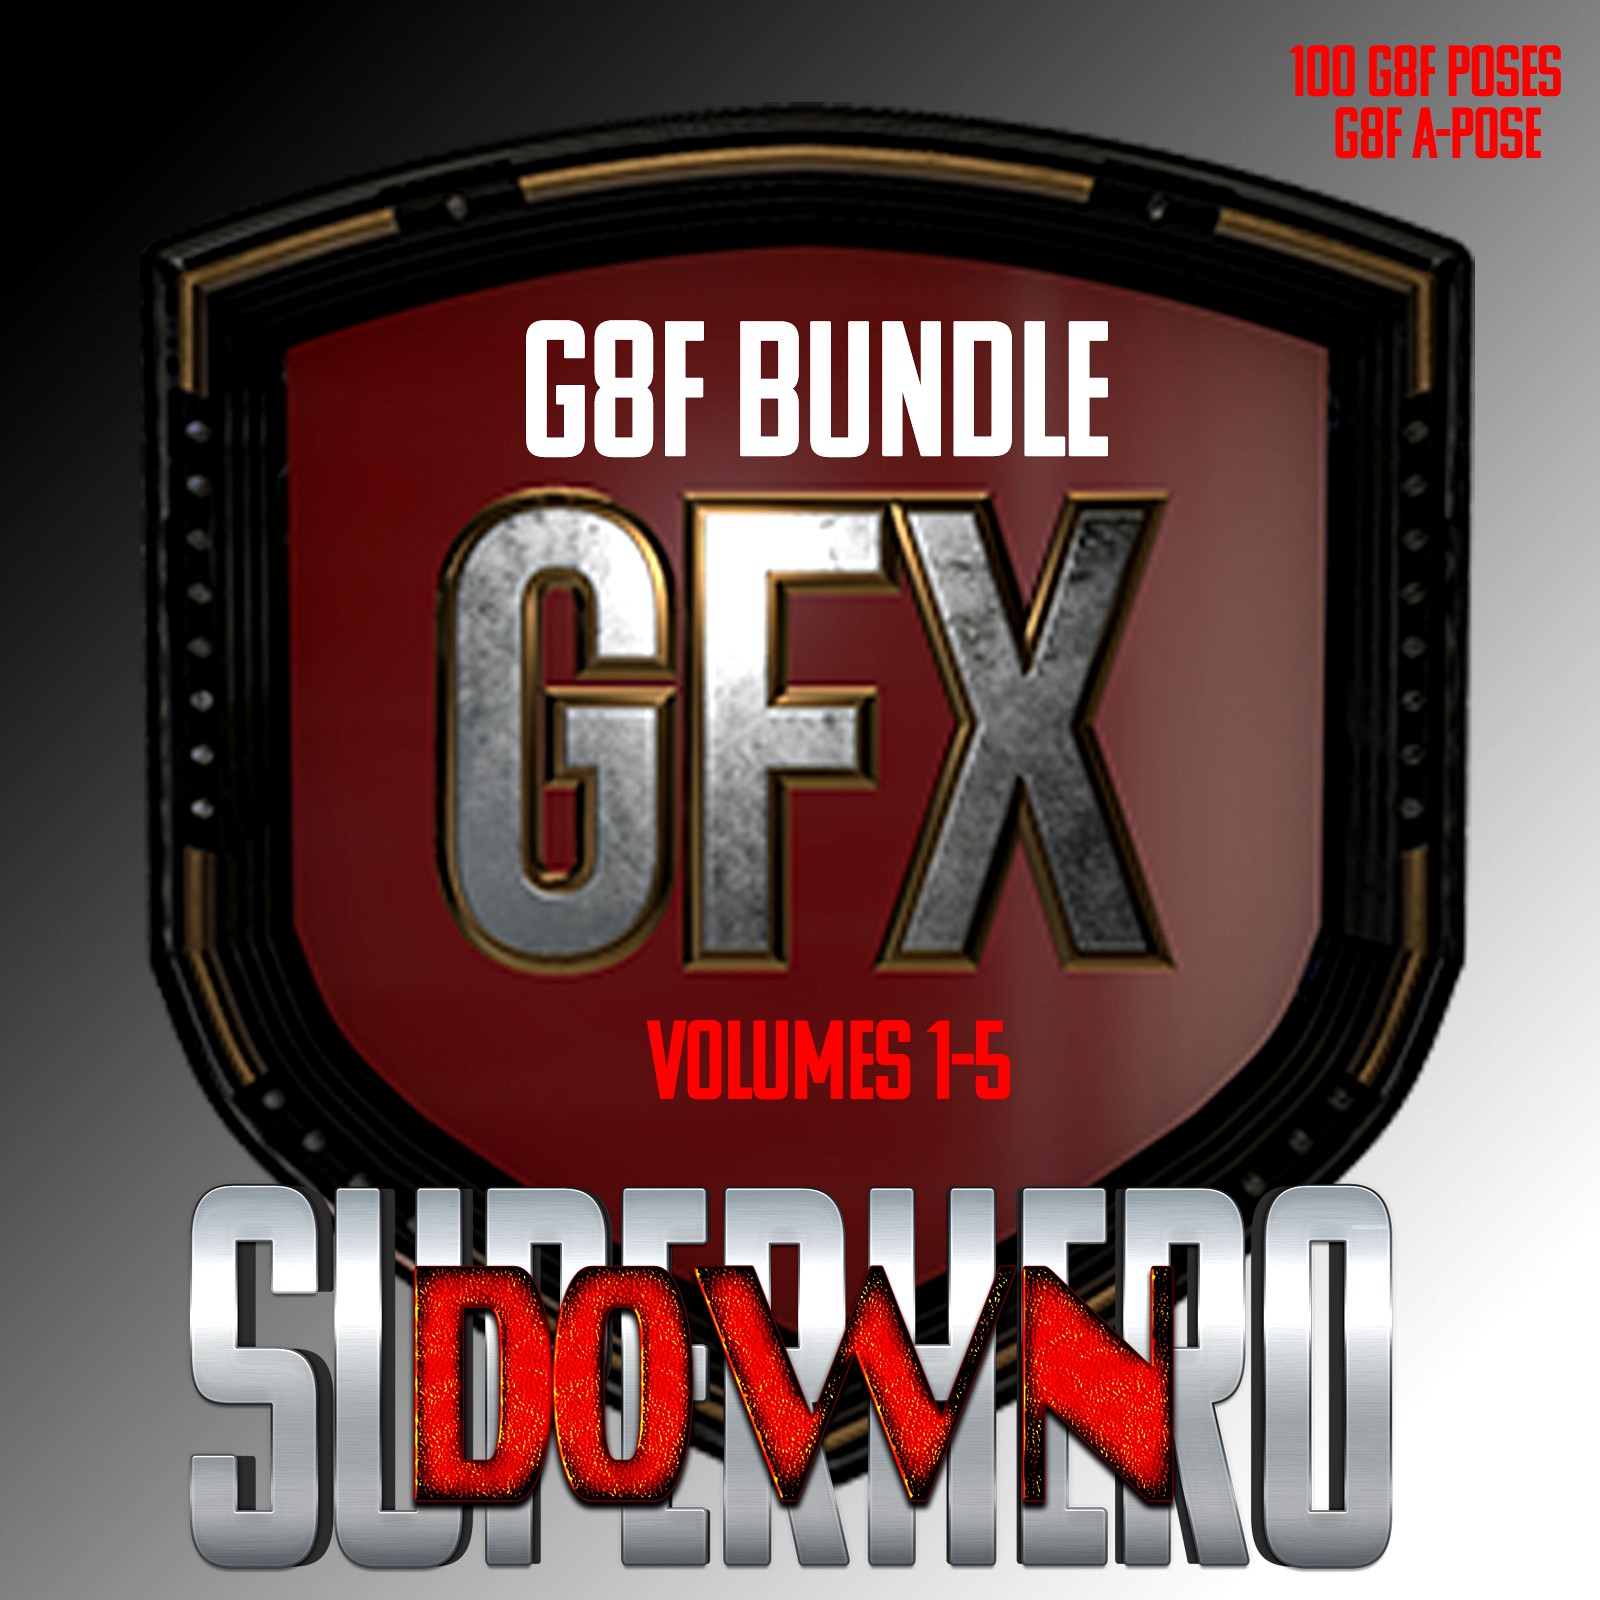 SuperHero Down Bundle for G8F